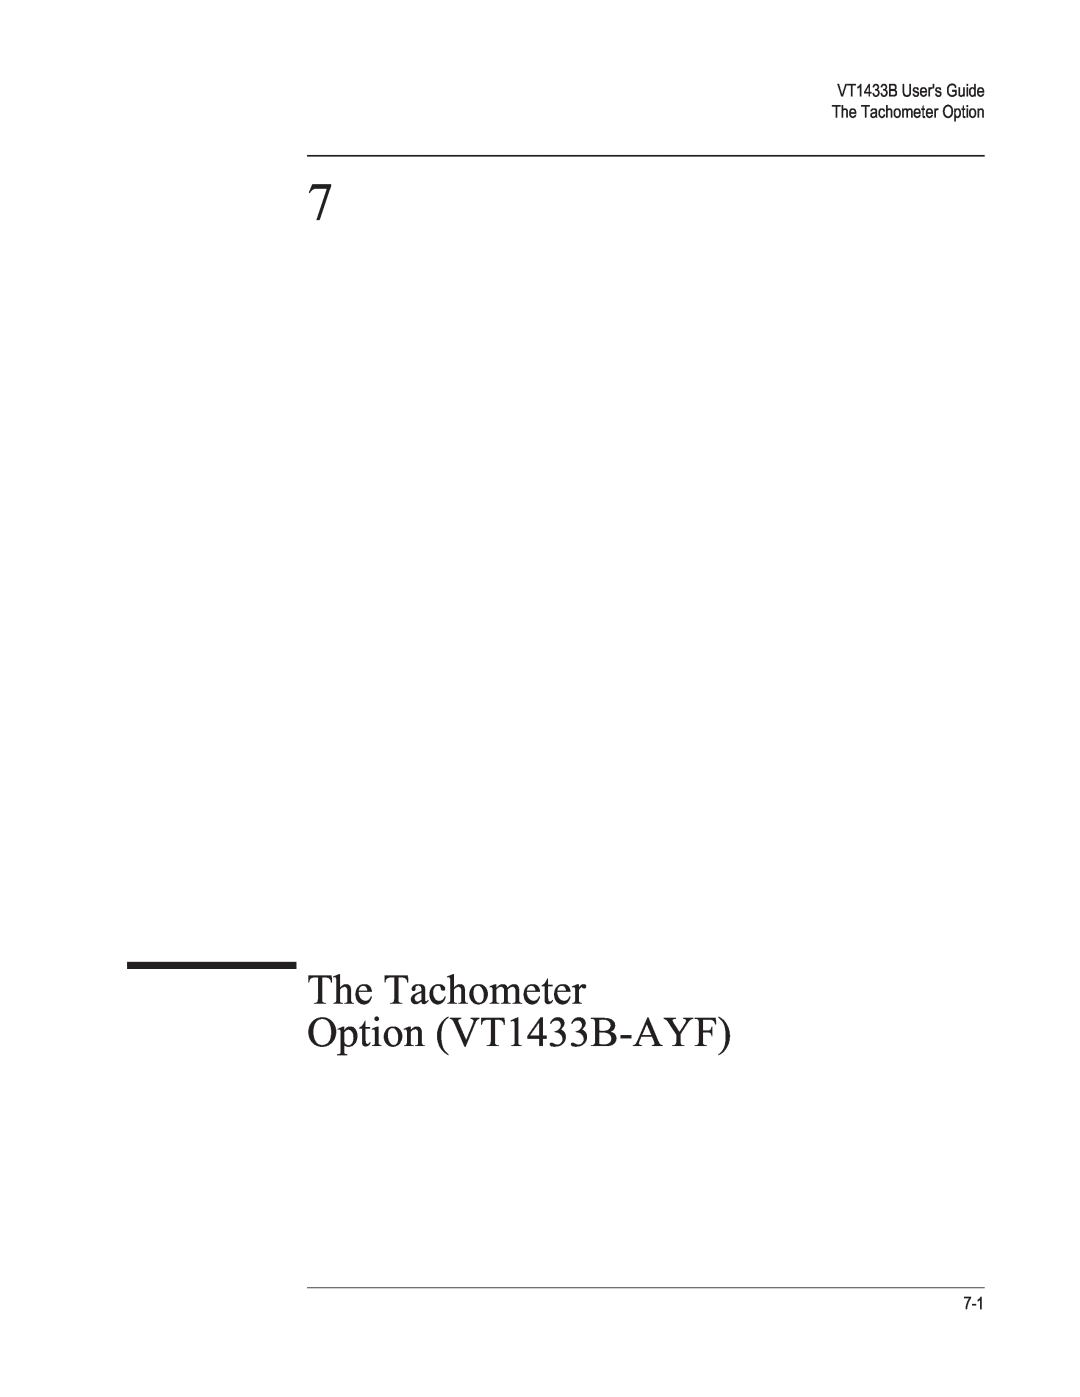 VXI manual The Tachometer Option VT1433B-AYF, VT1433B Users Guide The Tachometer Option 